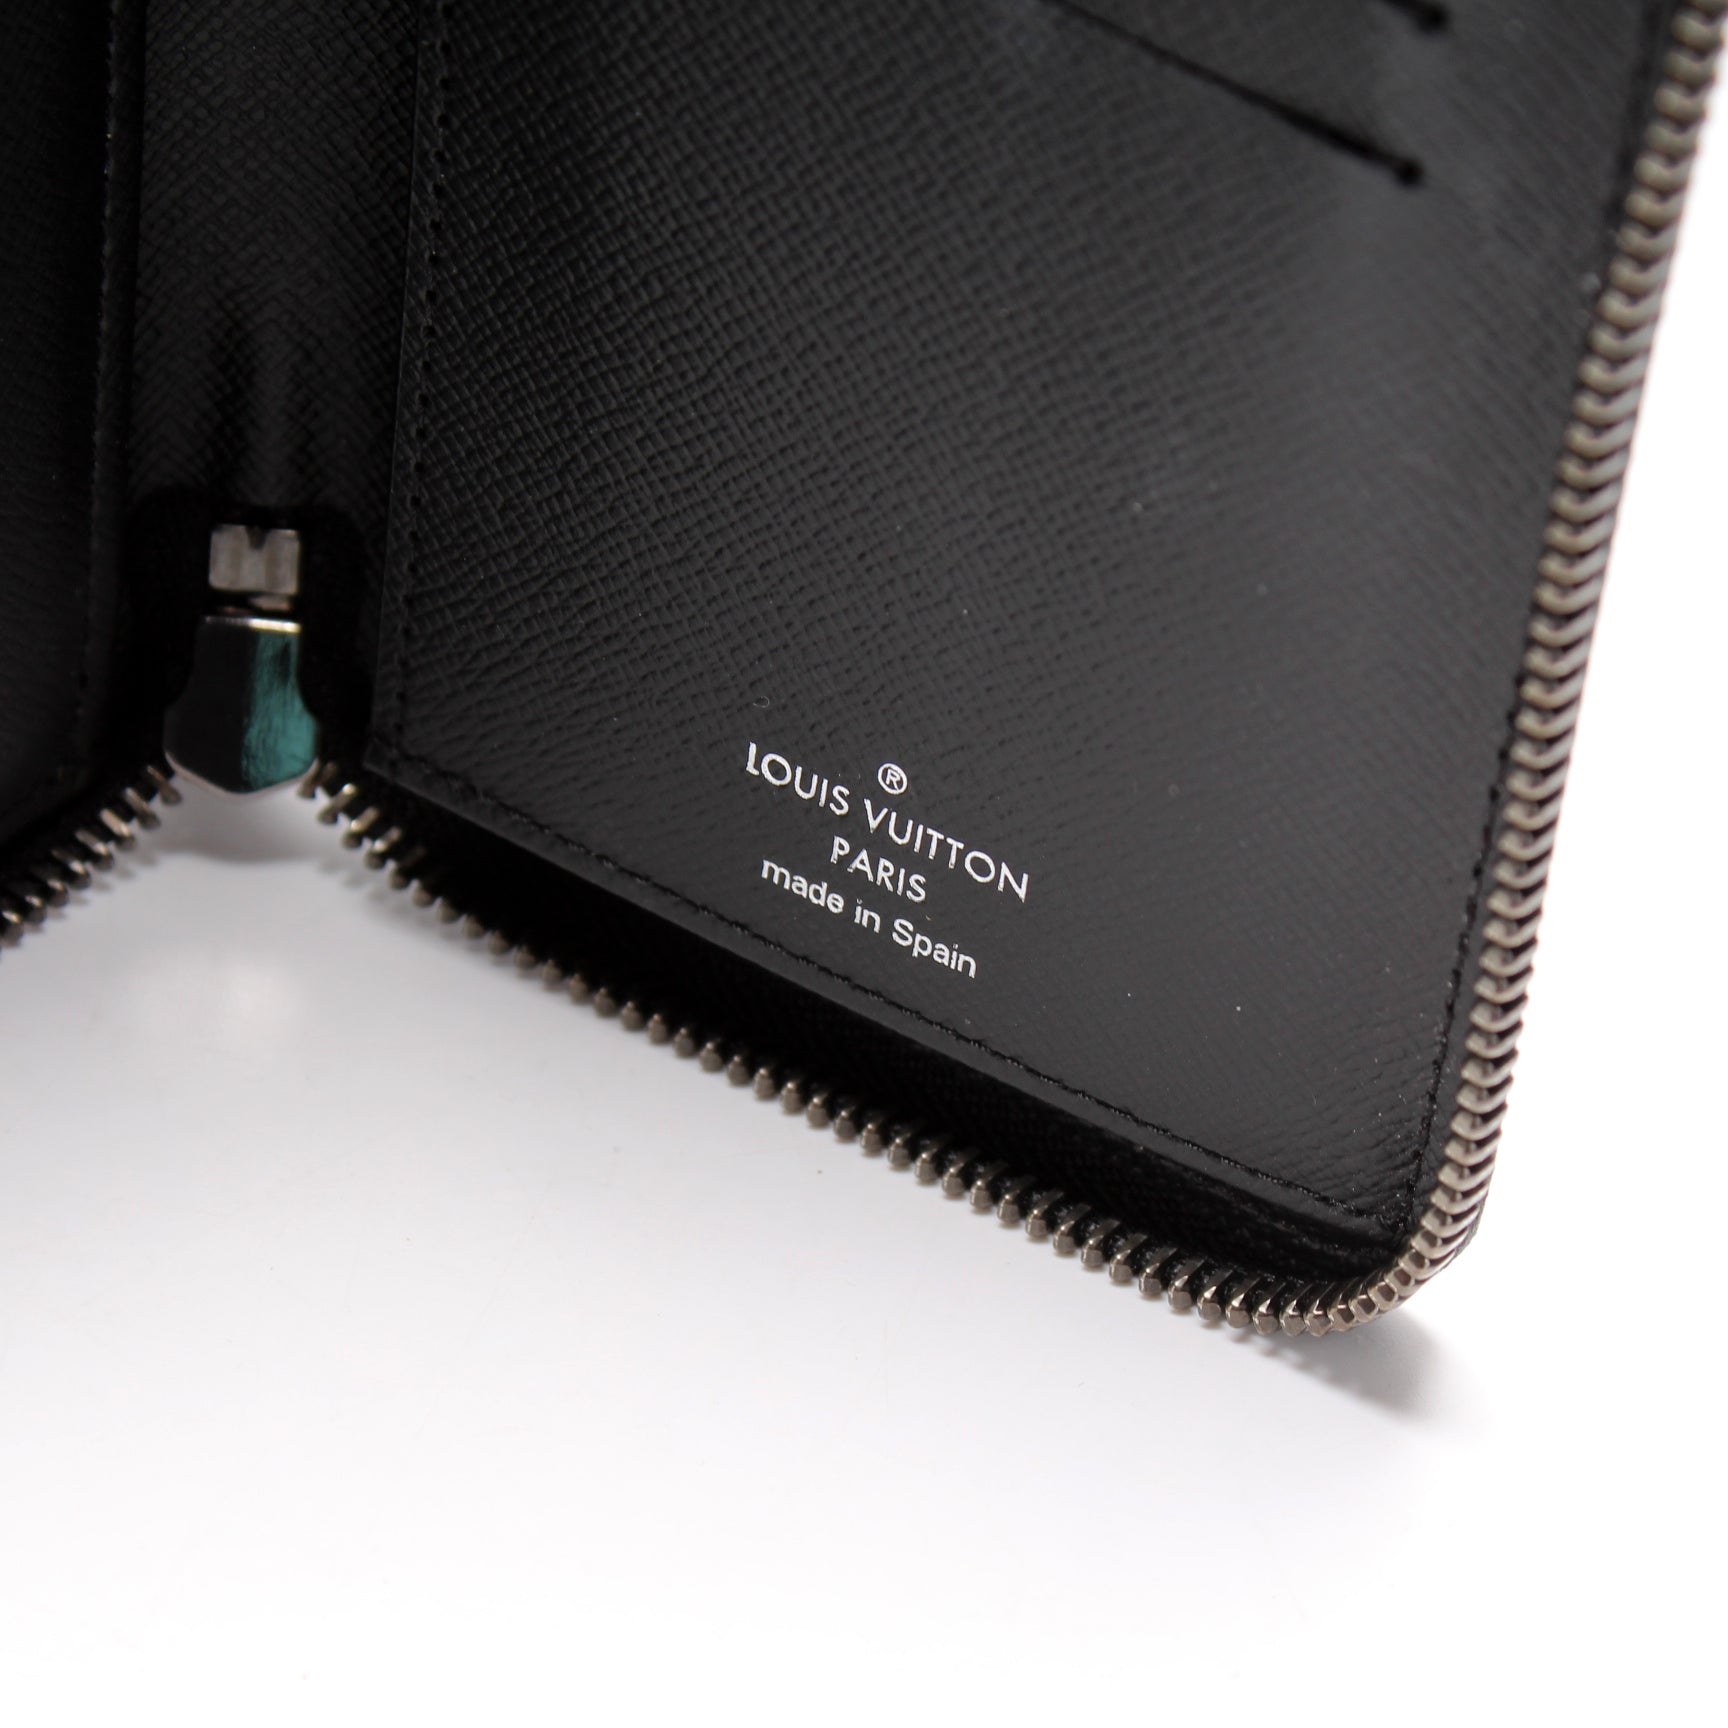 Zippy Vertical Monogram Eclipse – Keeks Designer Handbags